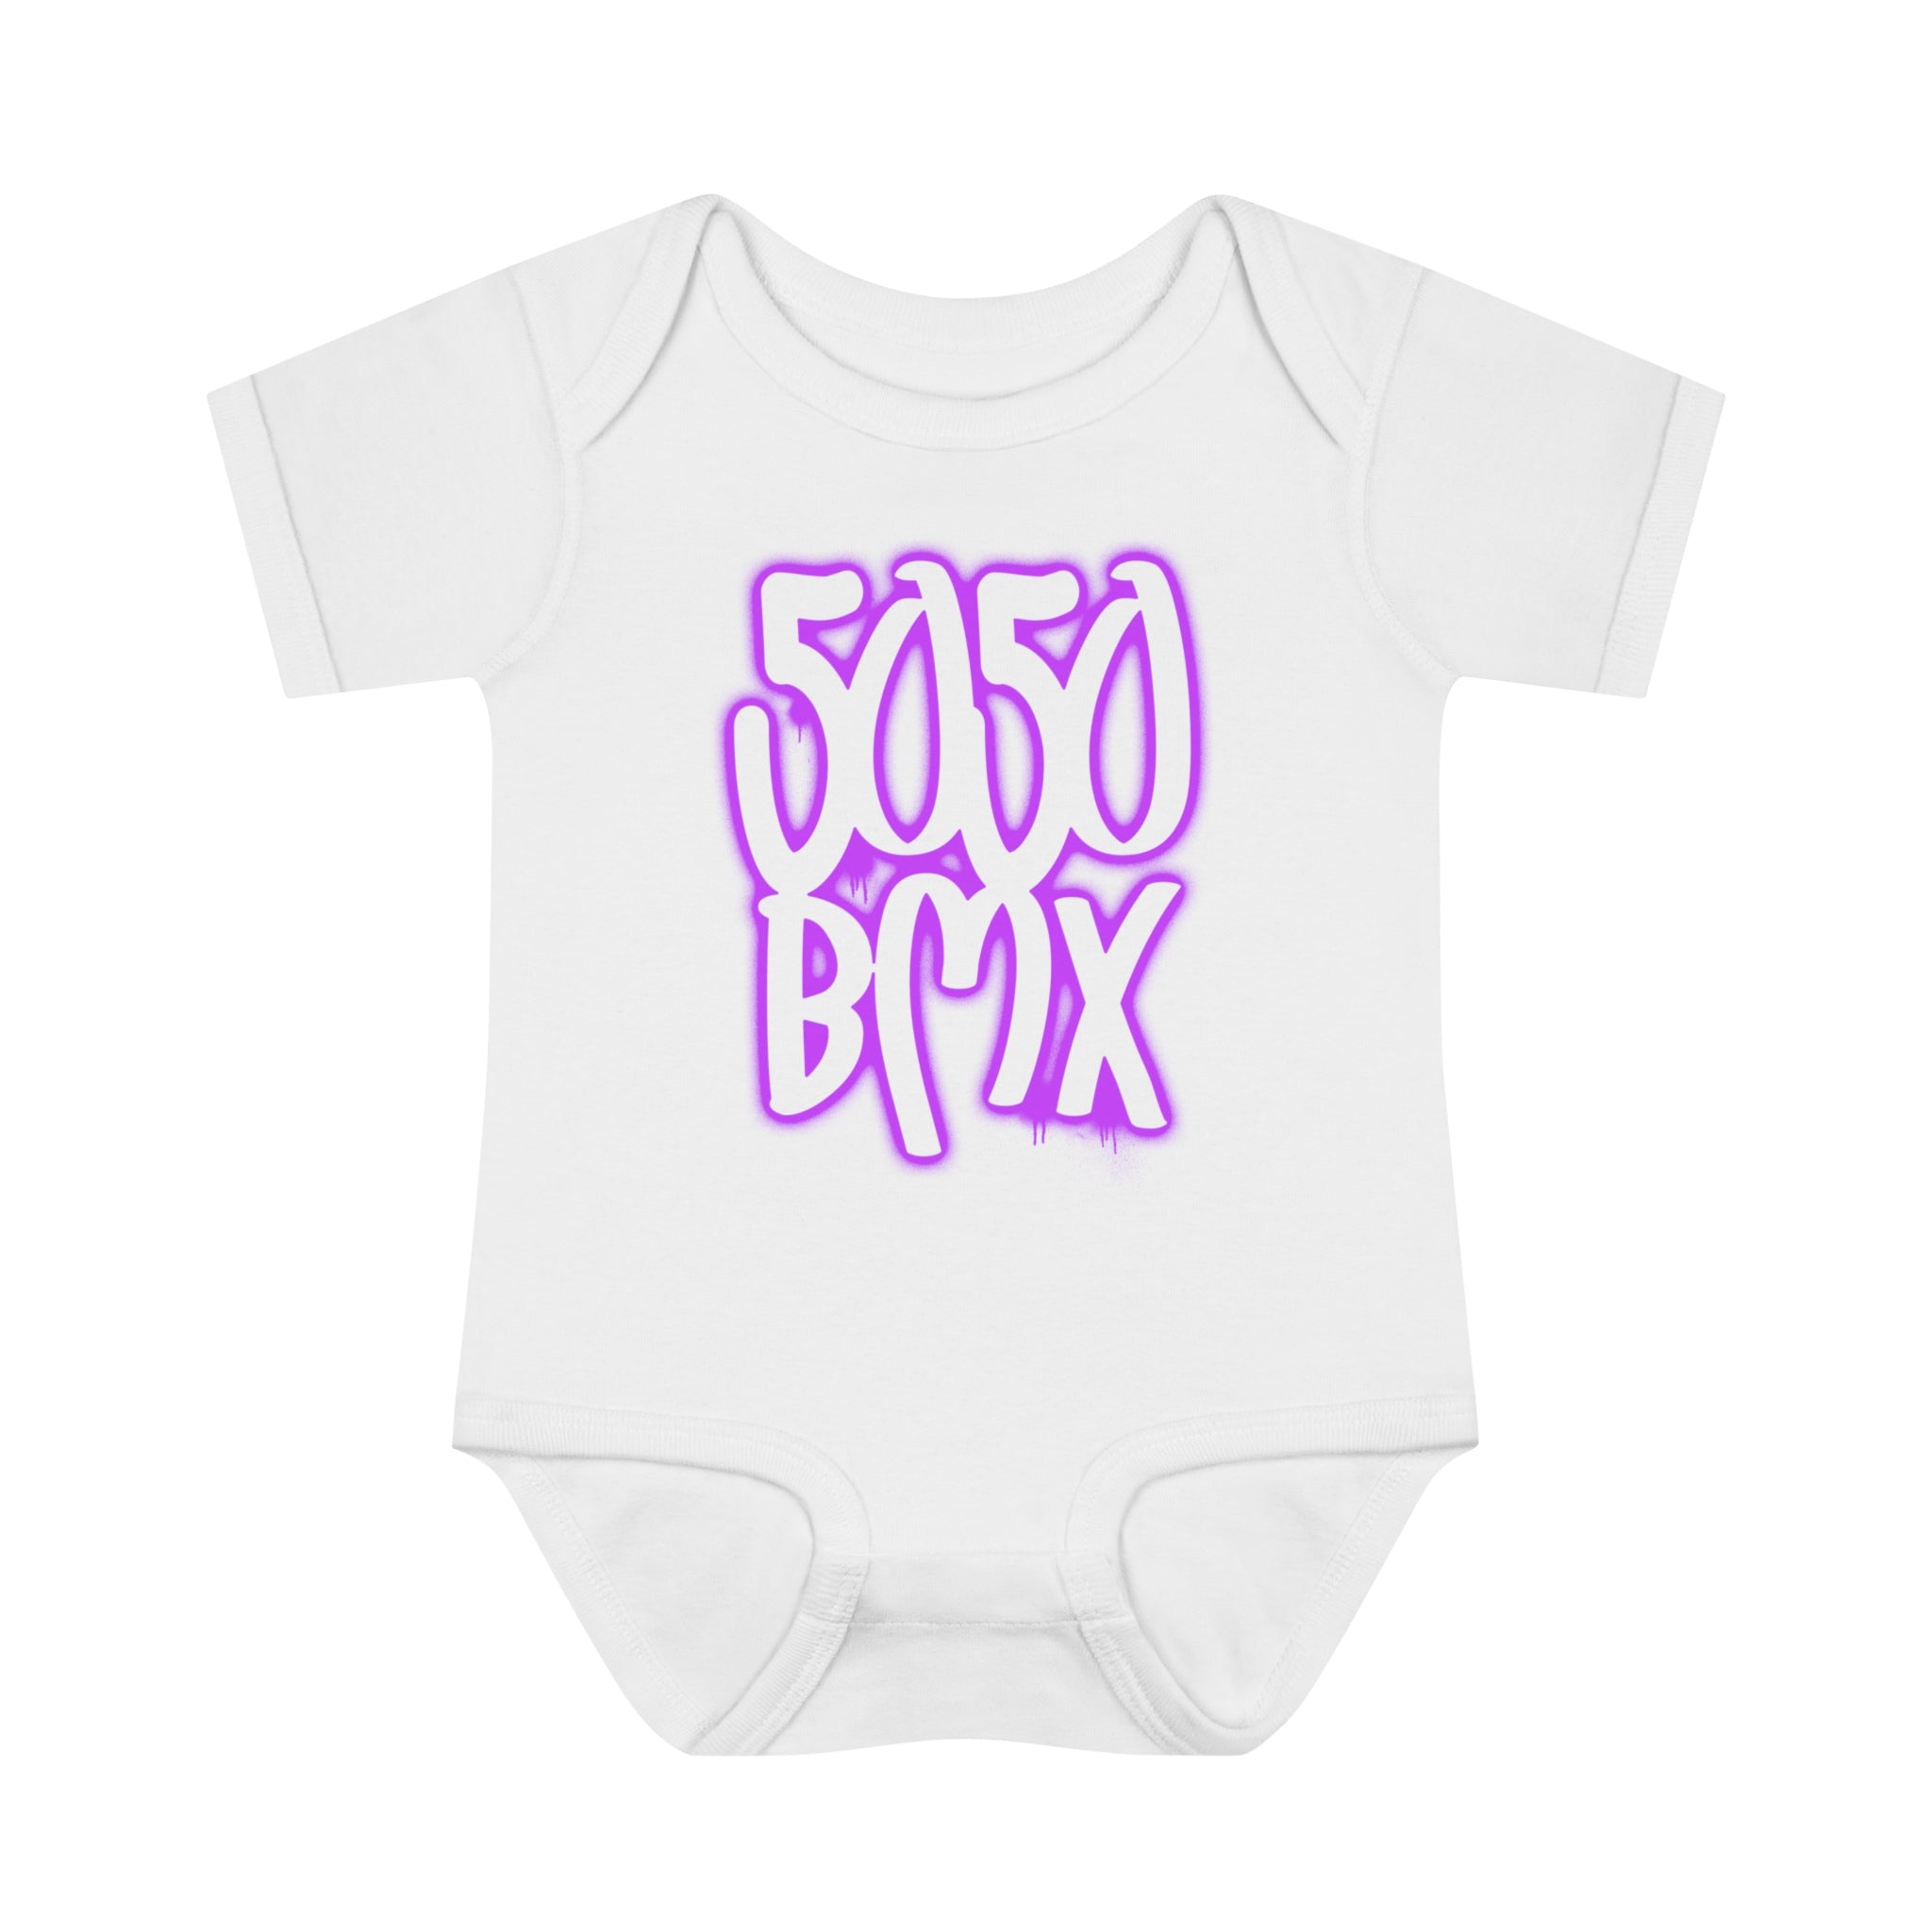 5050bmx Graffiti Infant Baby Onesie (Purple)